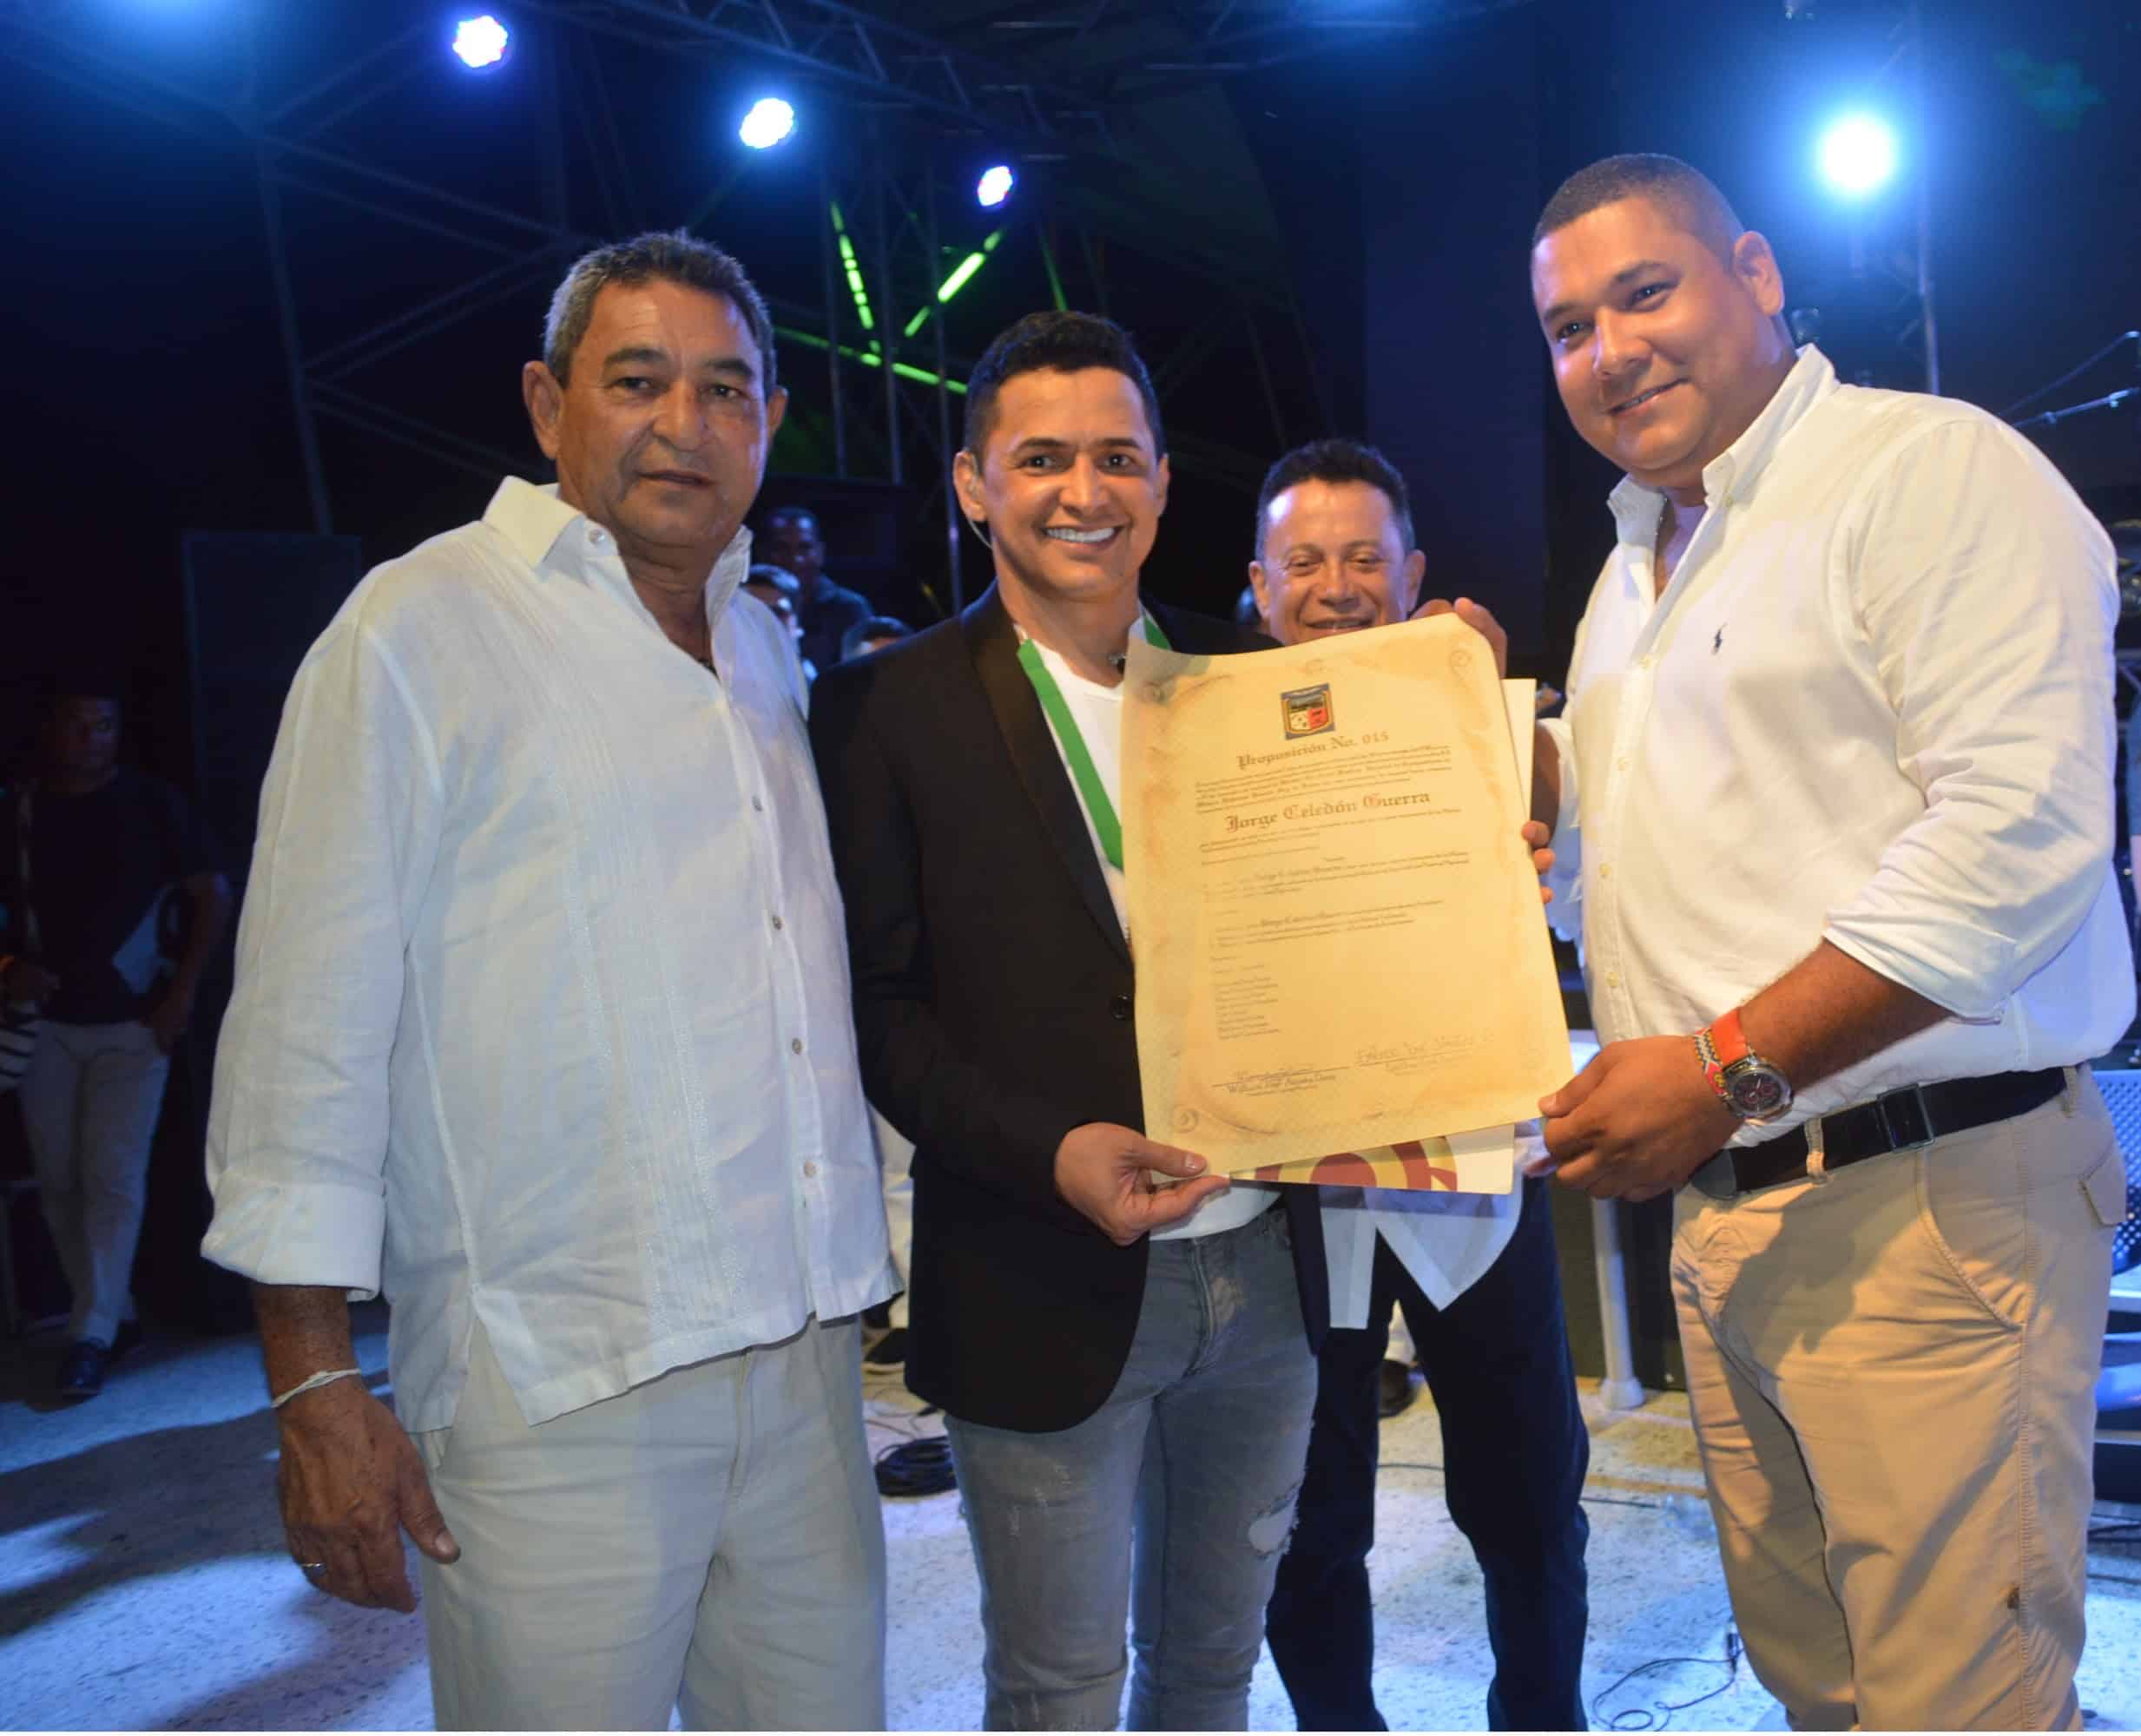 Jorge Celedón declarado ‘Hijo Adoptivo’ de San Juan del Cesar - Guajira